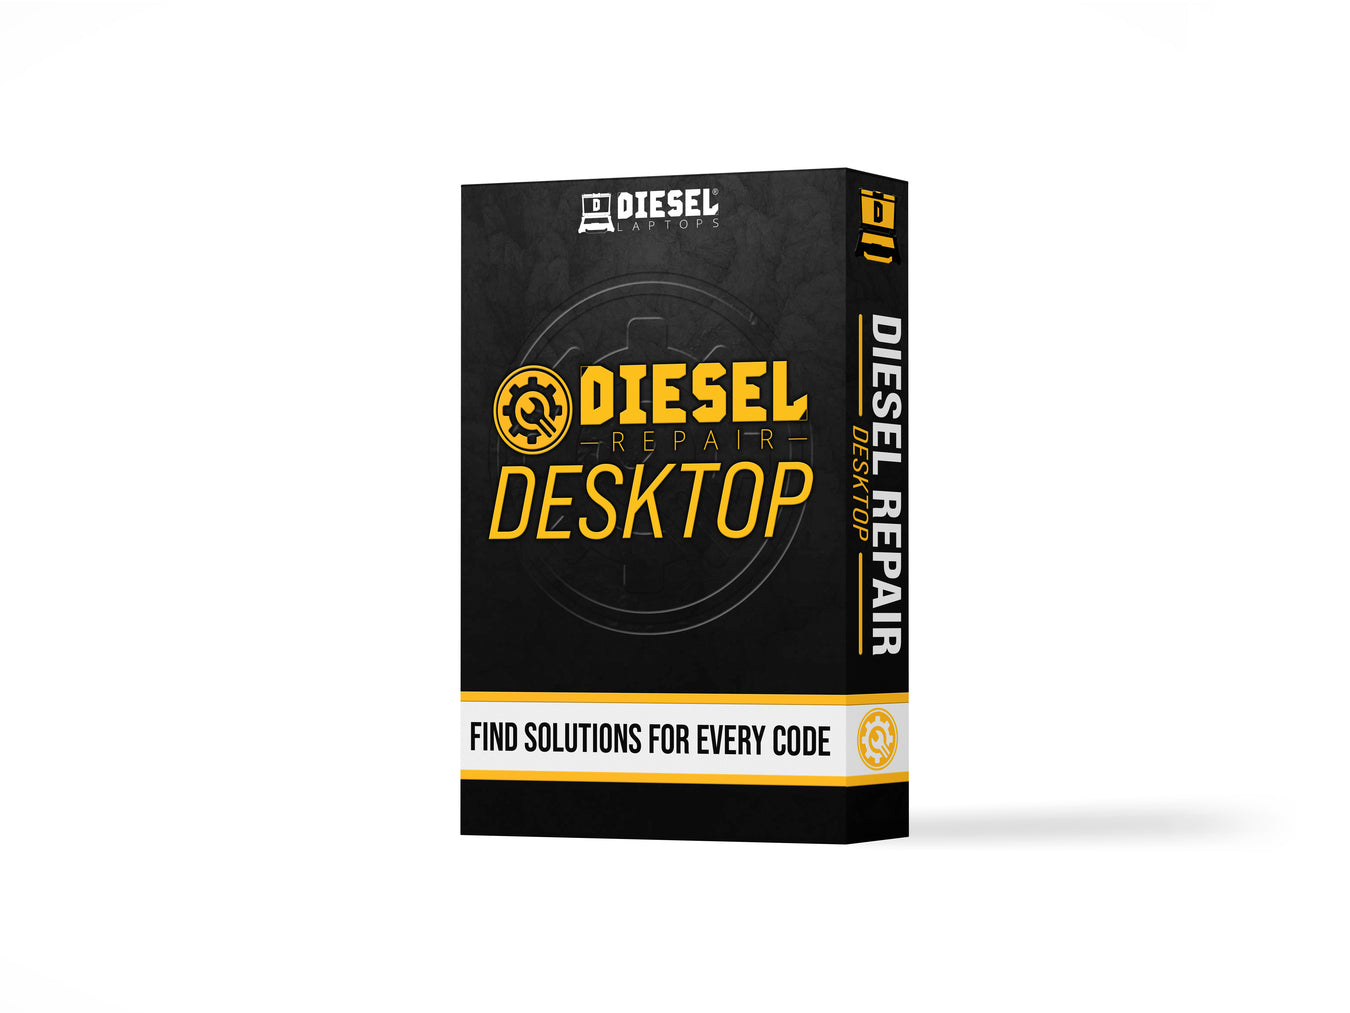 Diesel Laptops Software